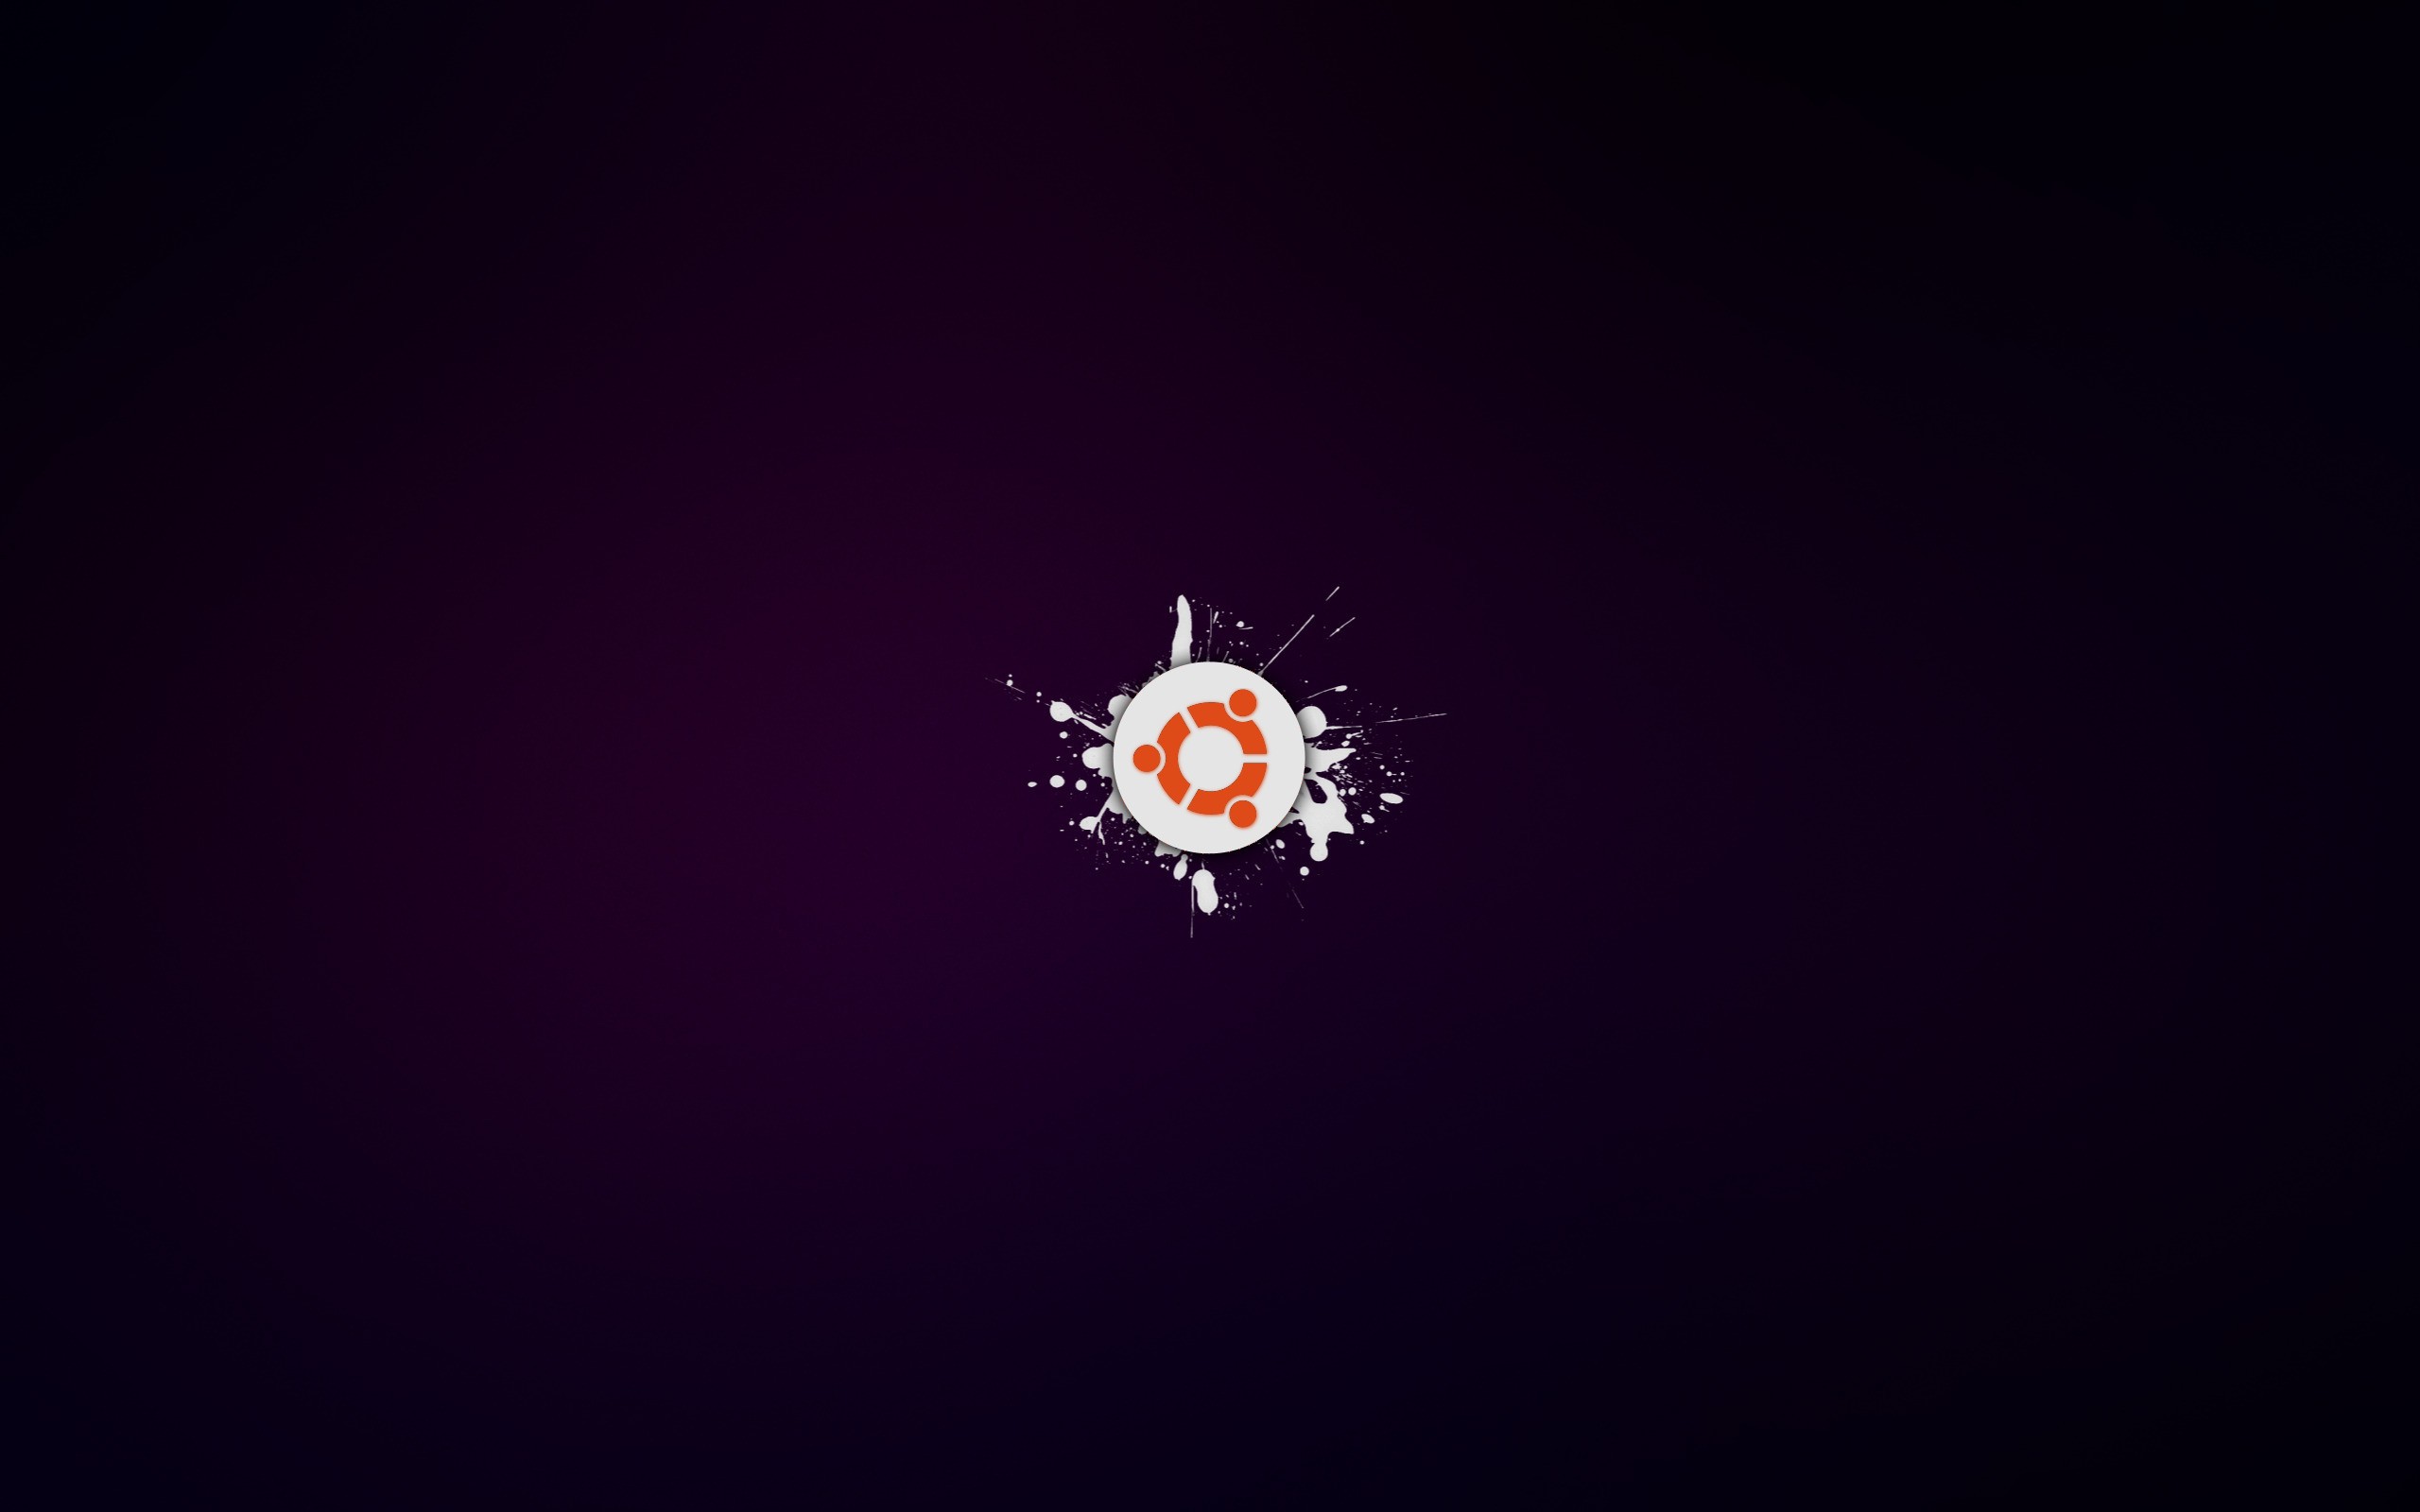 General 2560x1600 technology Ubuntu operating system logo purple background digital art